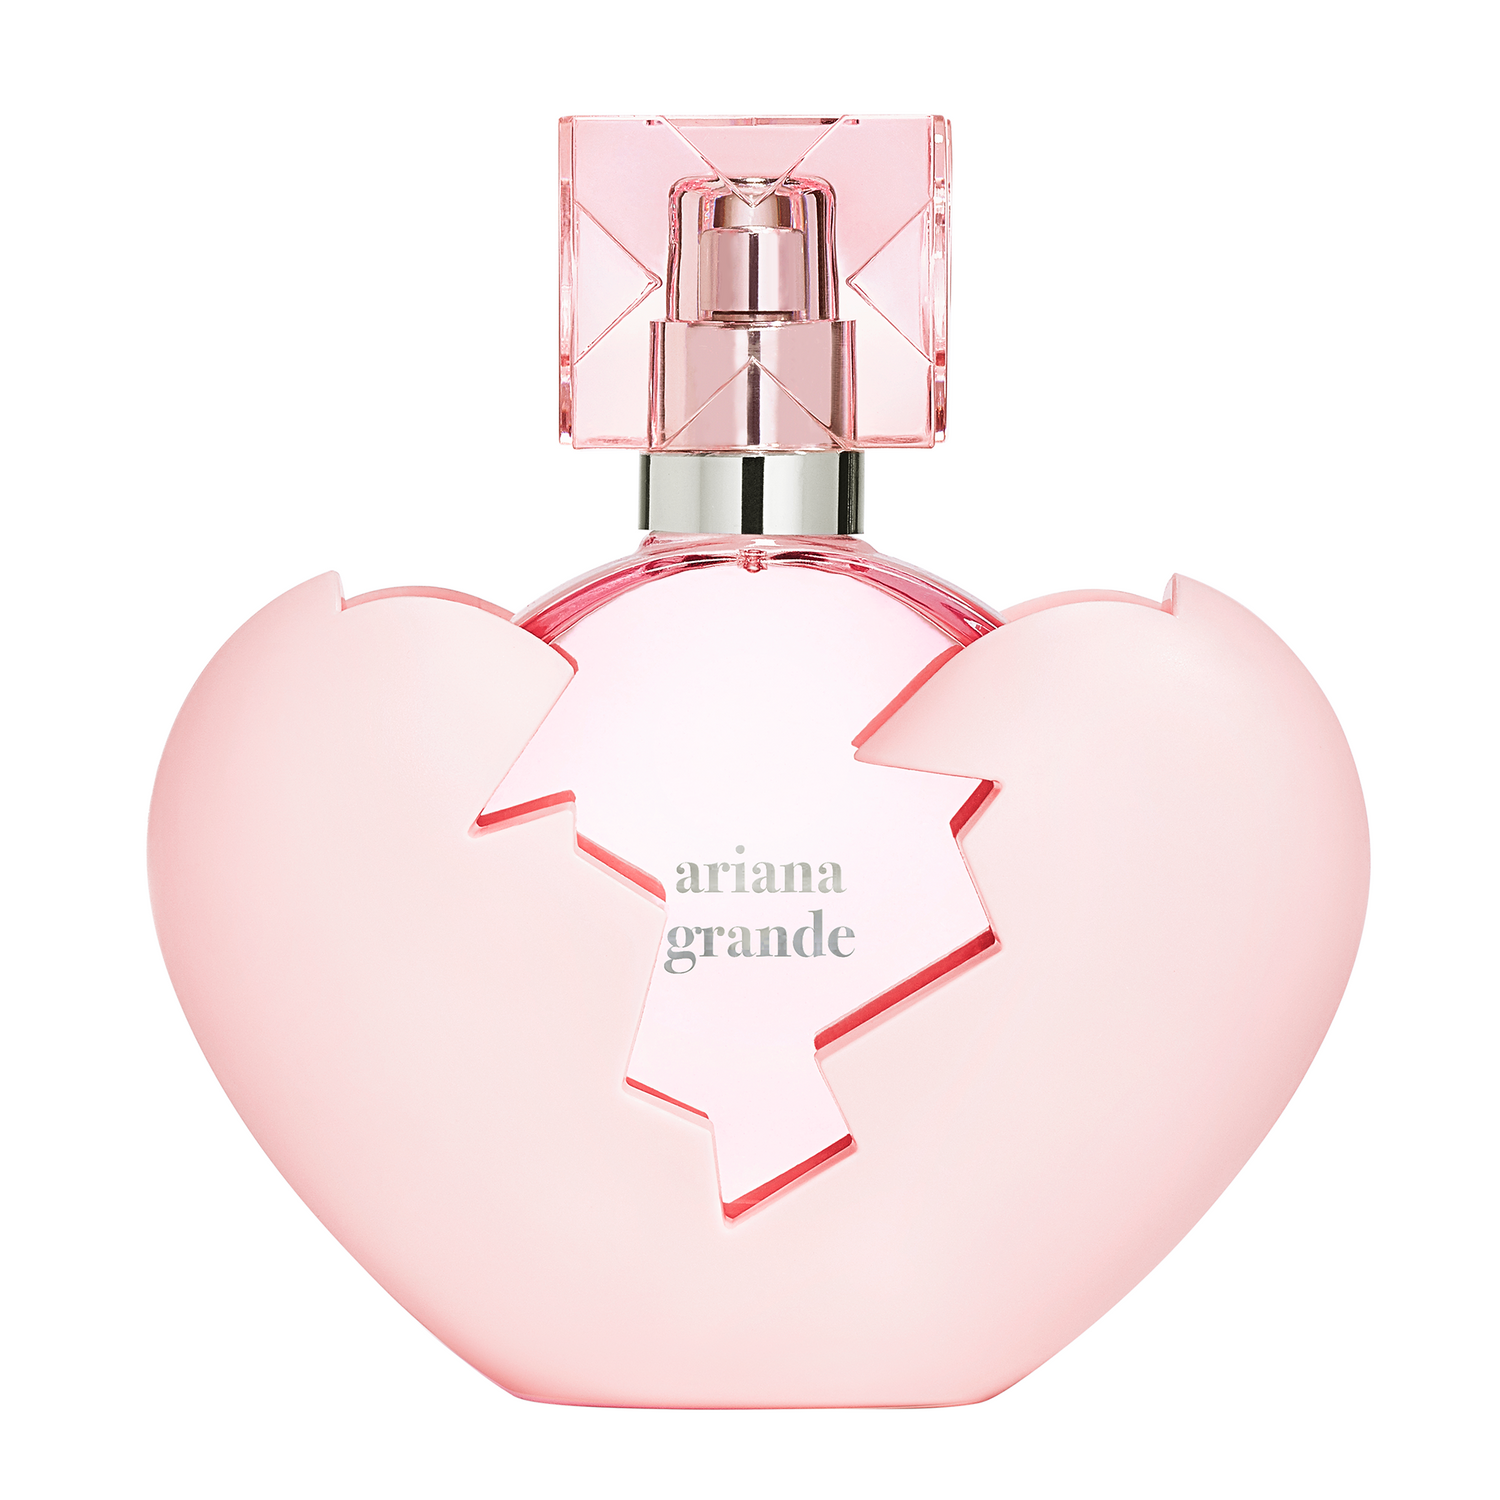 Thank U, Next by Ariana Grande perfume bottle